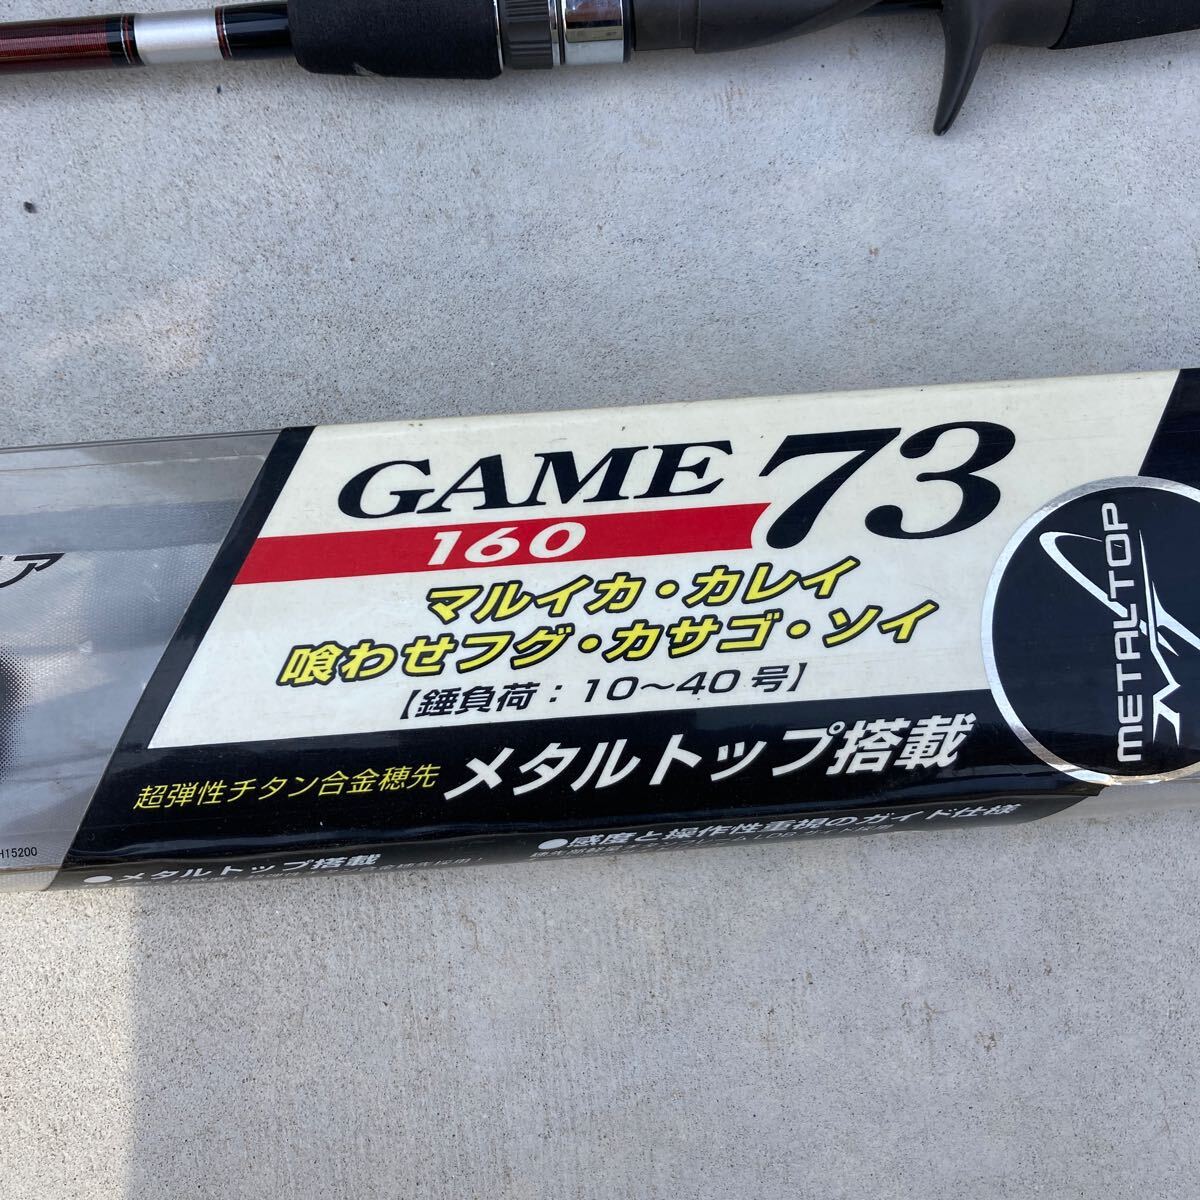 Daiwa メタリアゲーム73 160 ソフトケース箱付き